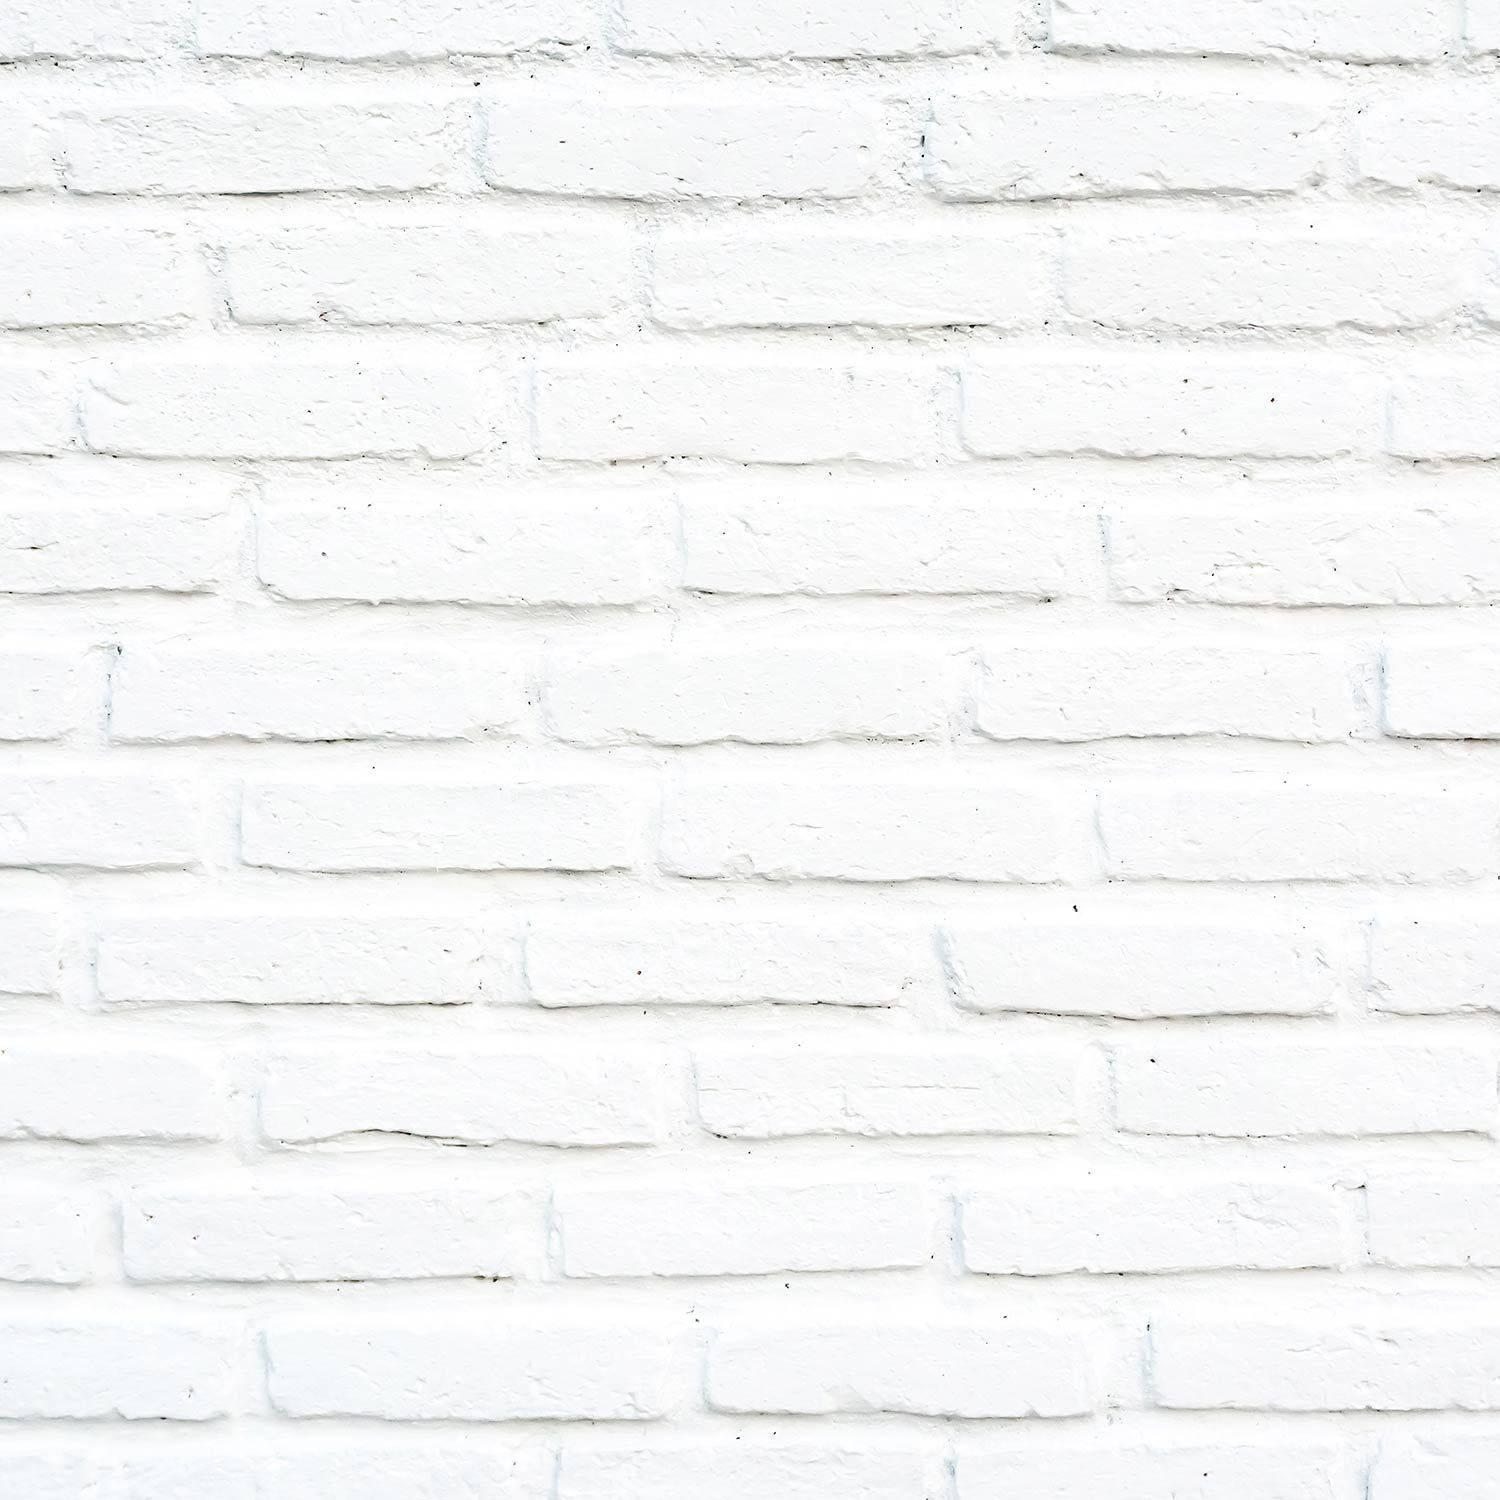 Bright White Brick Wall In Stretcher Bond Pattern Wallpaper